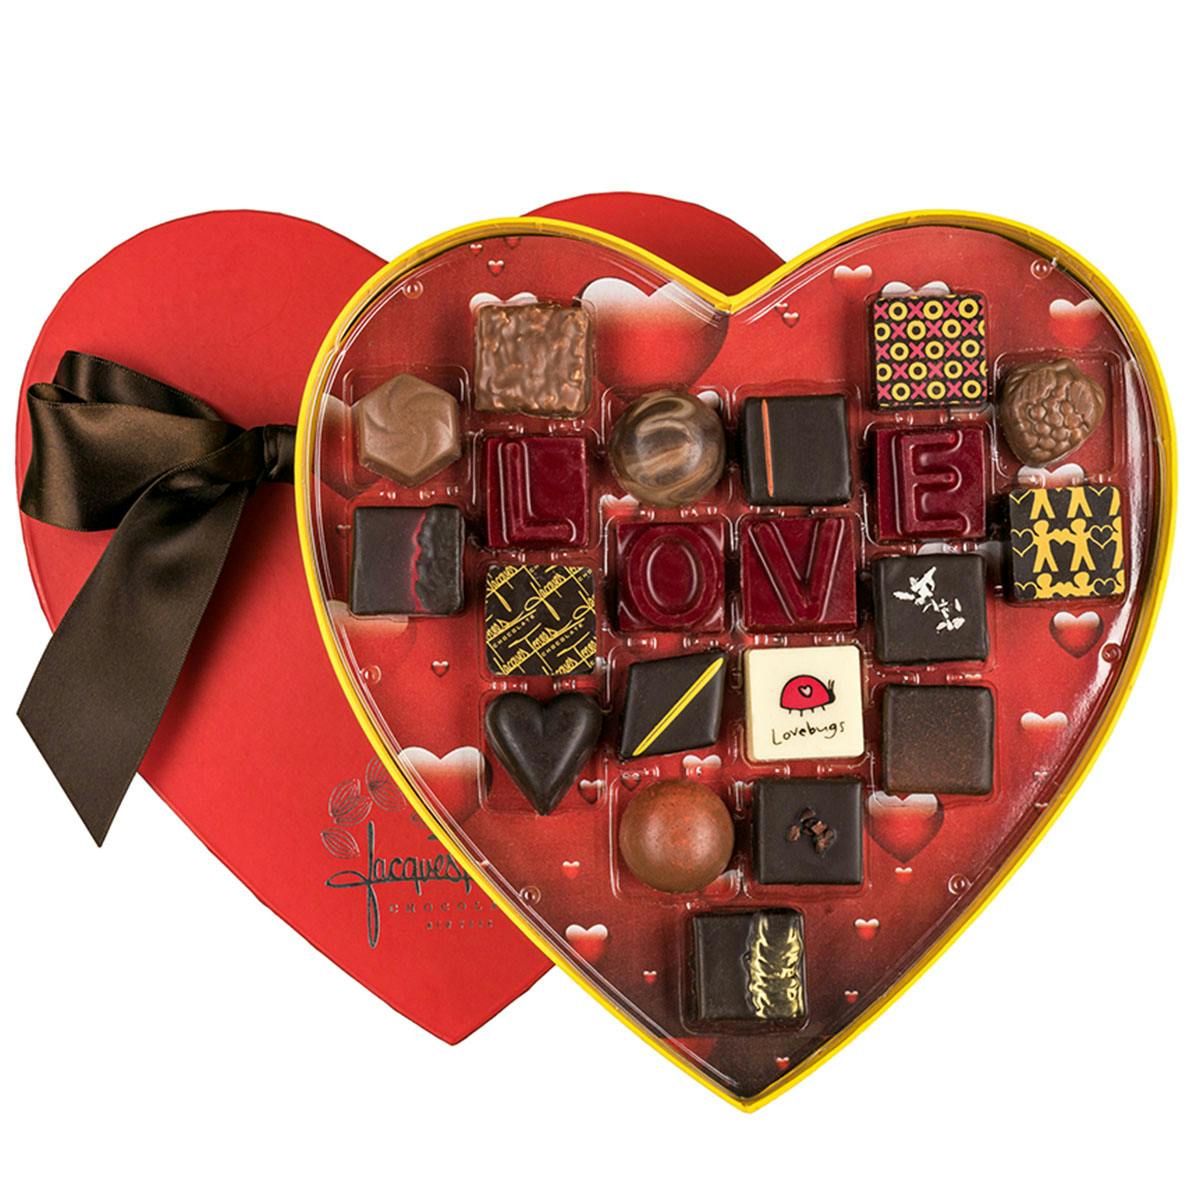 Retro Valentine's Chocolate Boxes : heart shaped chocolate box